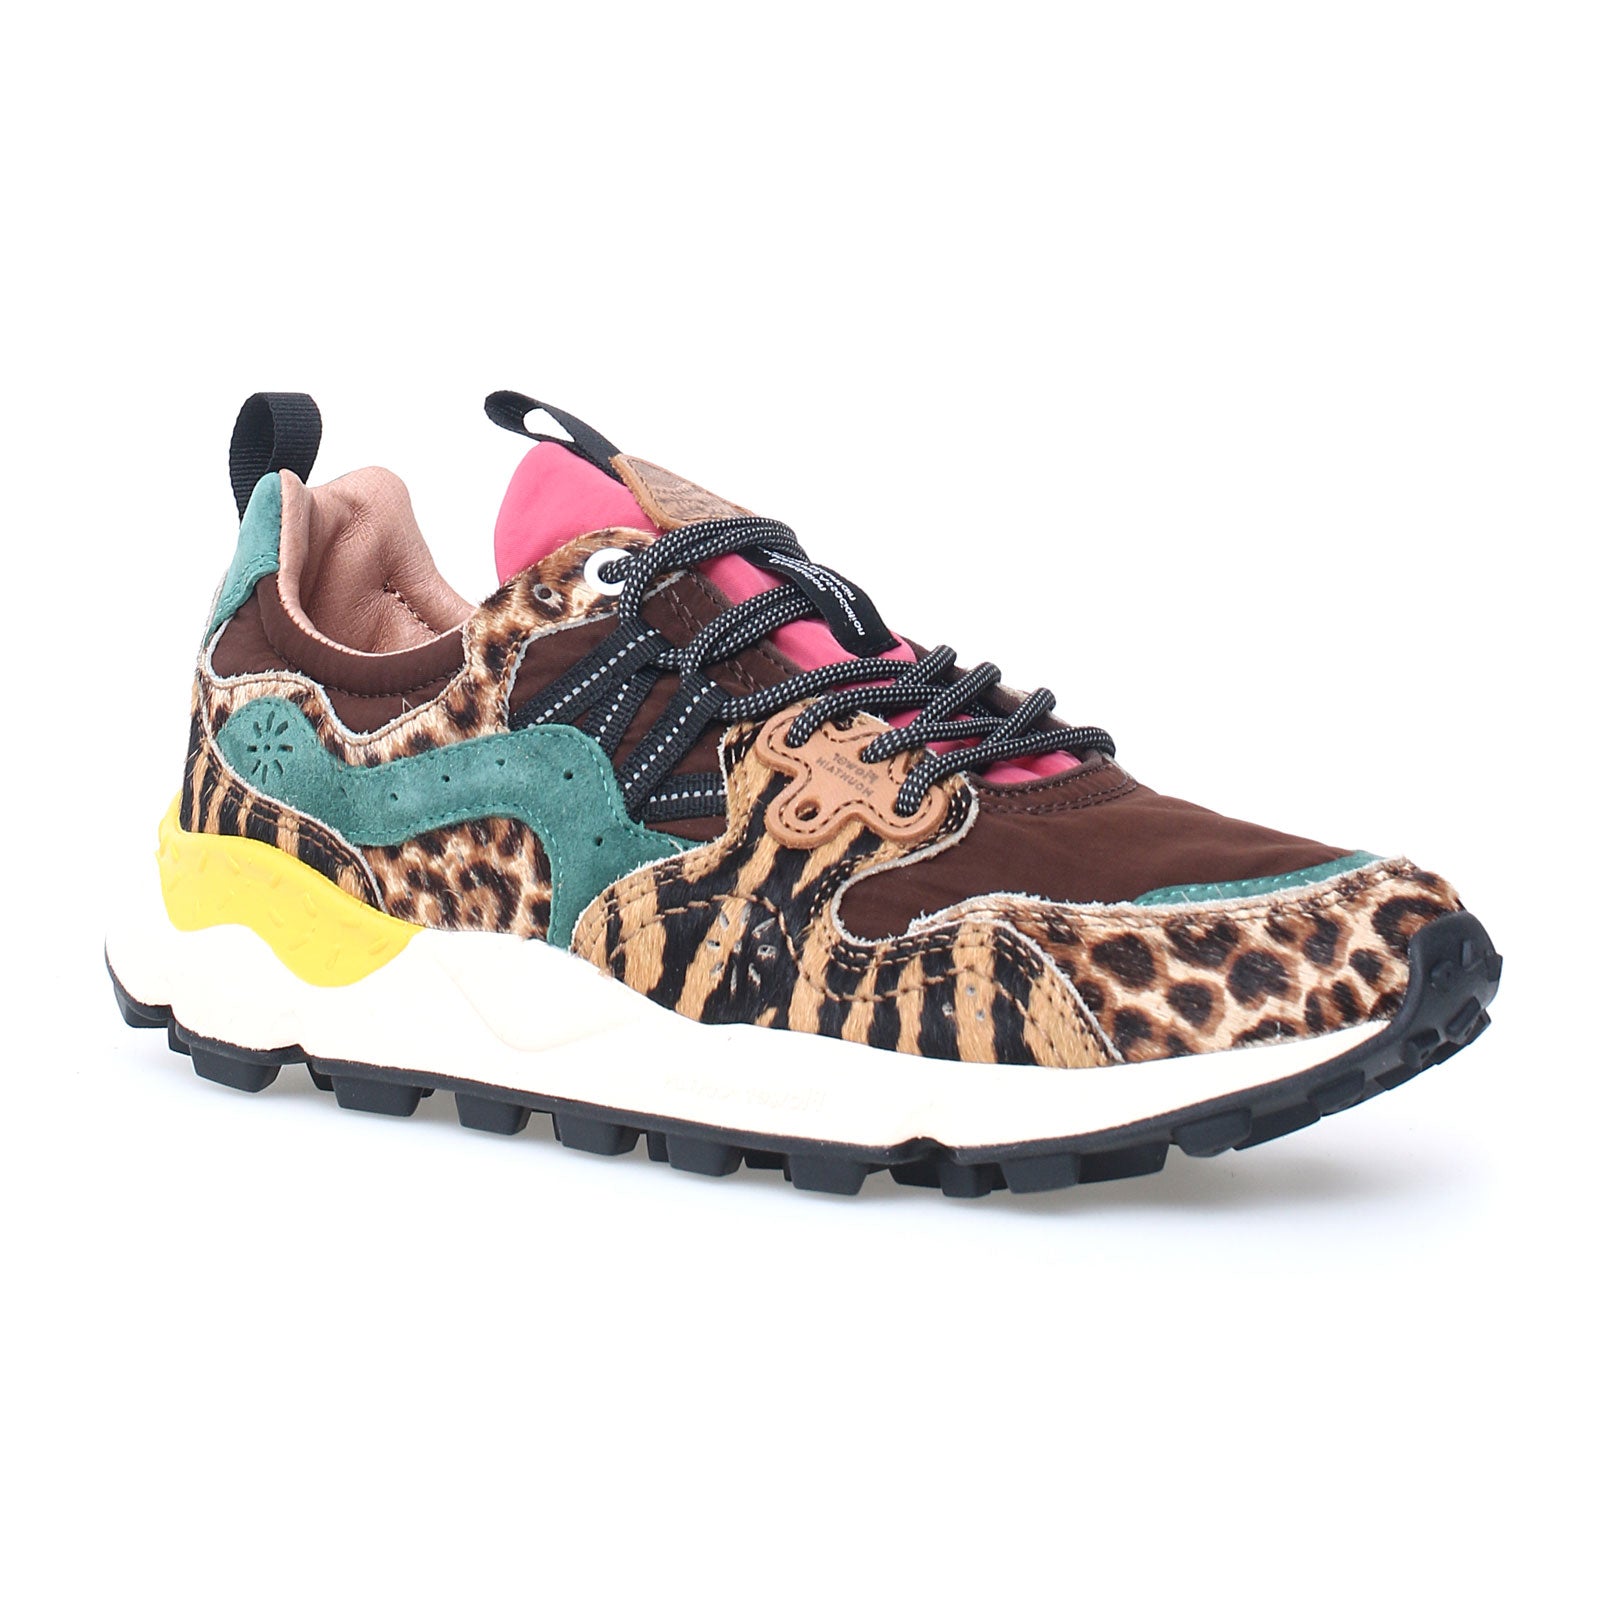 Flower Mountain Yamano 3 Sneaker (Women) - Brown/Aqua Green Dress-Casual - Sneakers - The Heel Shoe Fitters